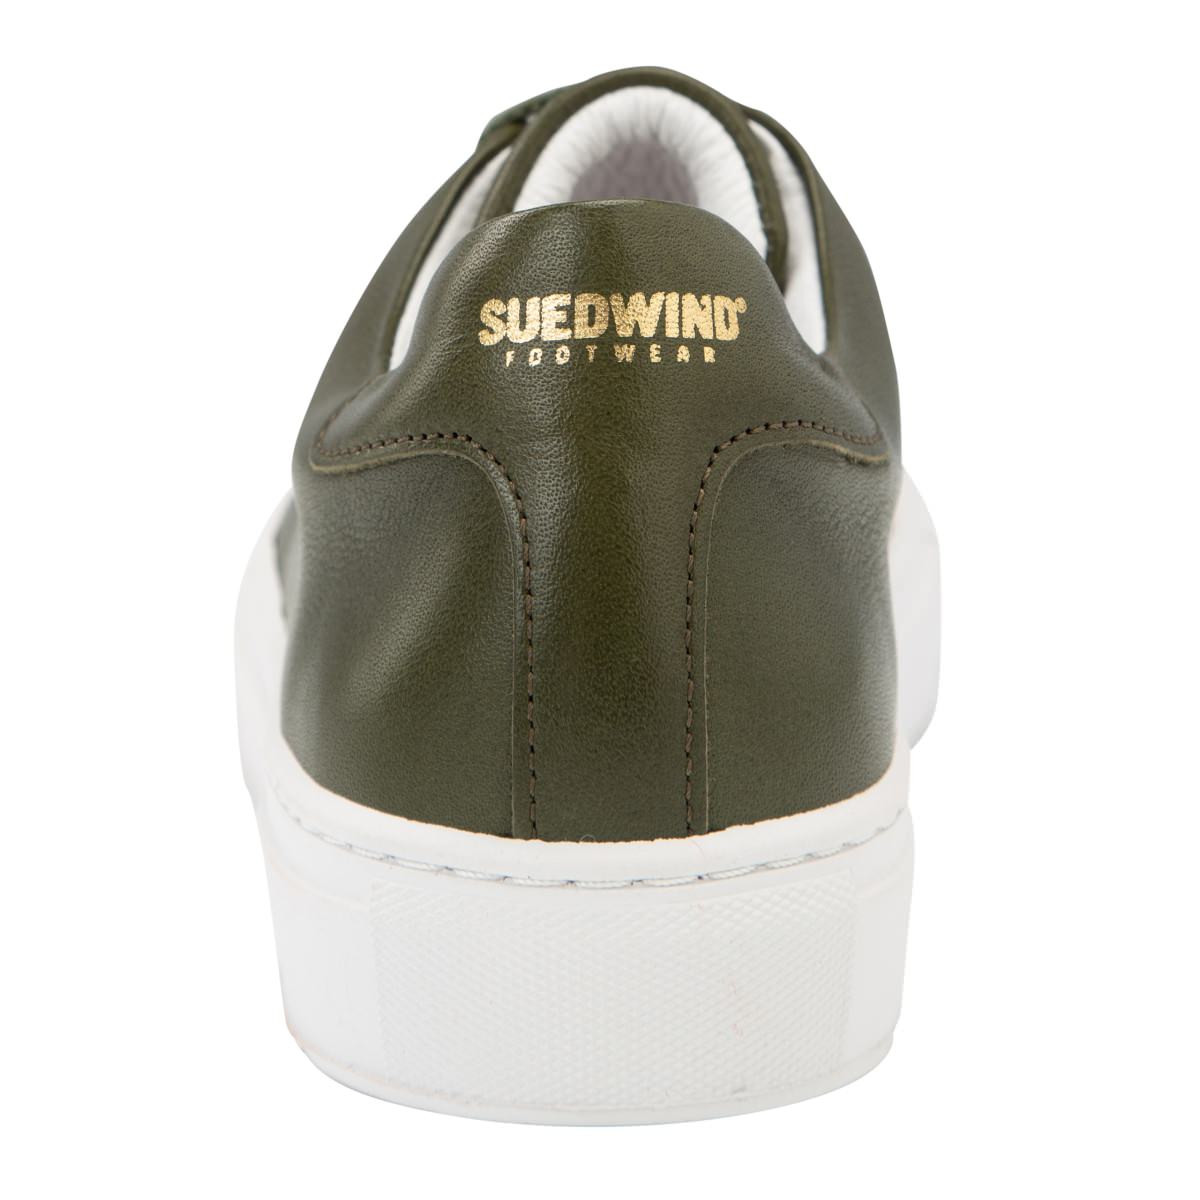 Suedwind-Ashton-Leather-Leder-Sneaker-Schuhe-Boots-Green-Gruen-10170028-05_1280x1280